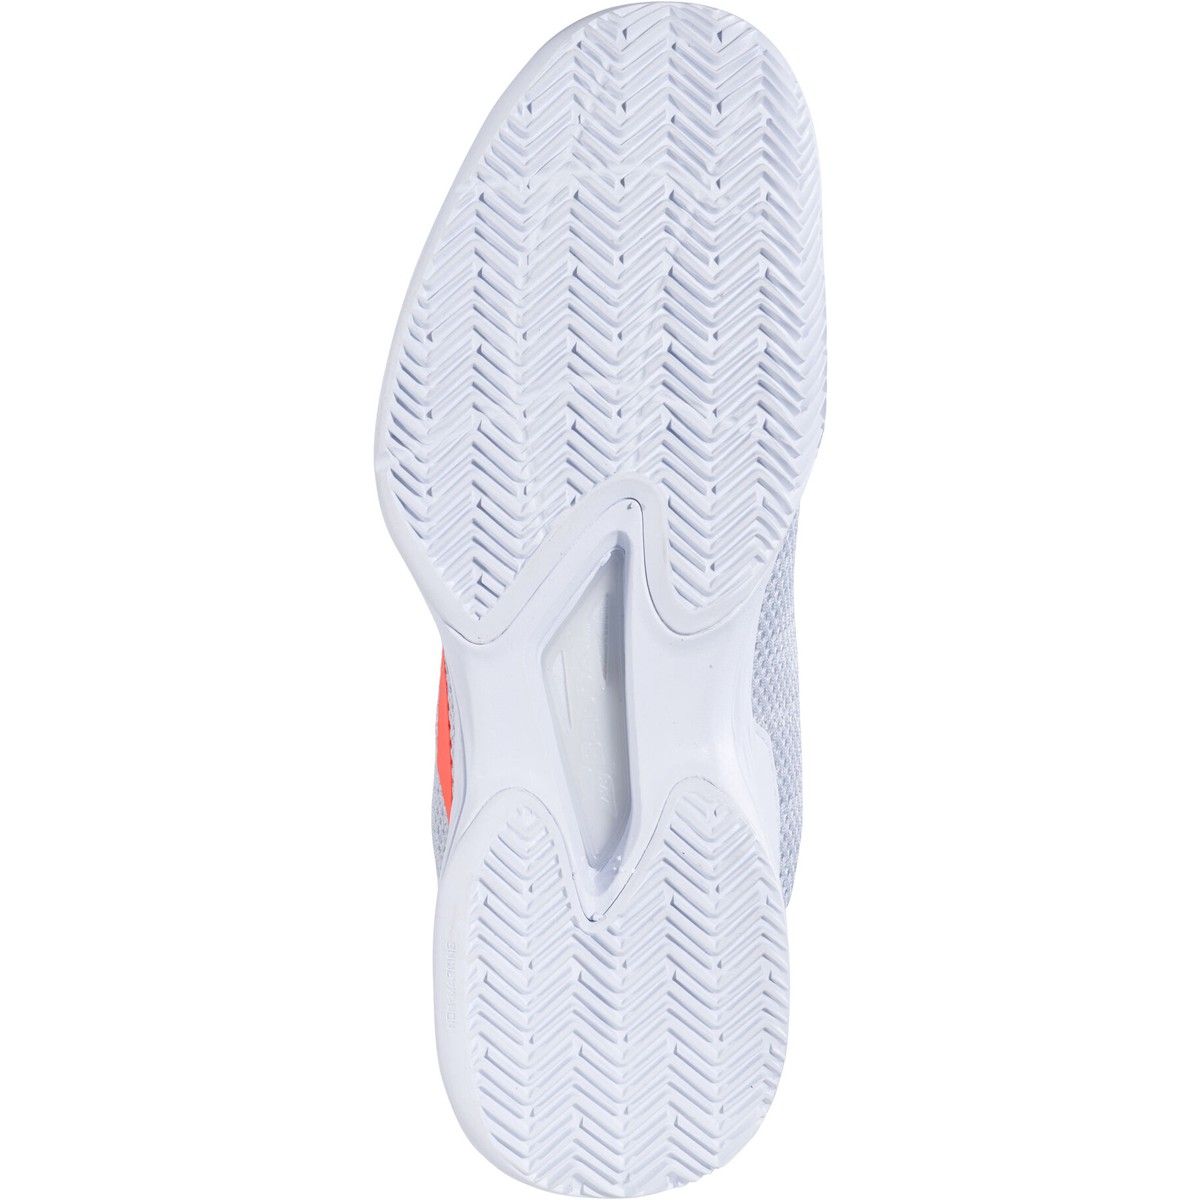 Women's Jet Tere Clay Tennis Shoes Bianco/Corallo 